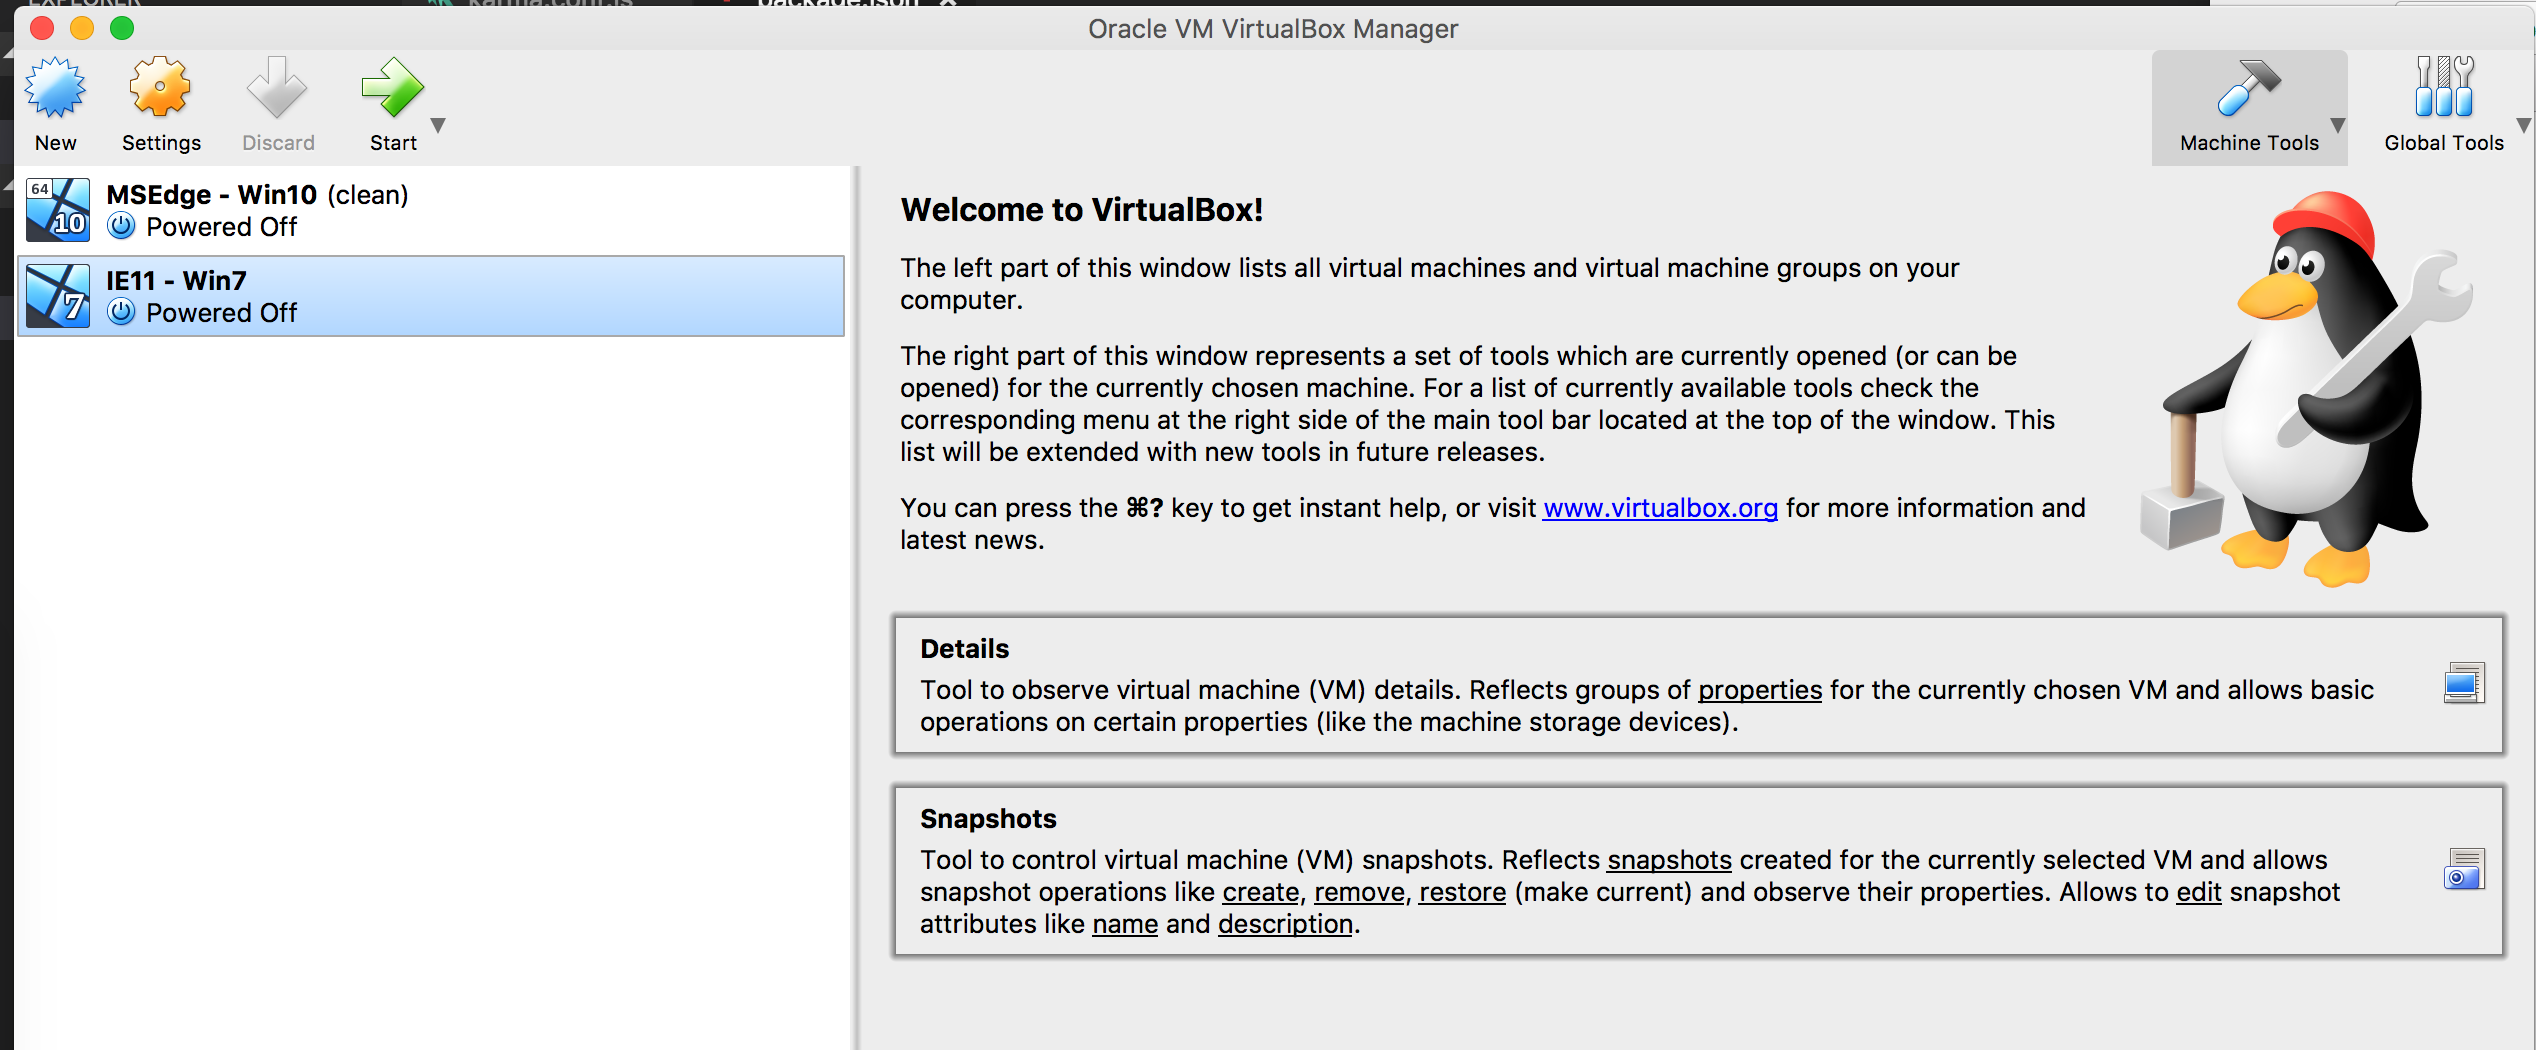 Windows 7 Ie11 Iso For Virtualbox On Mac